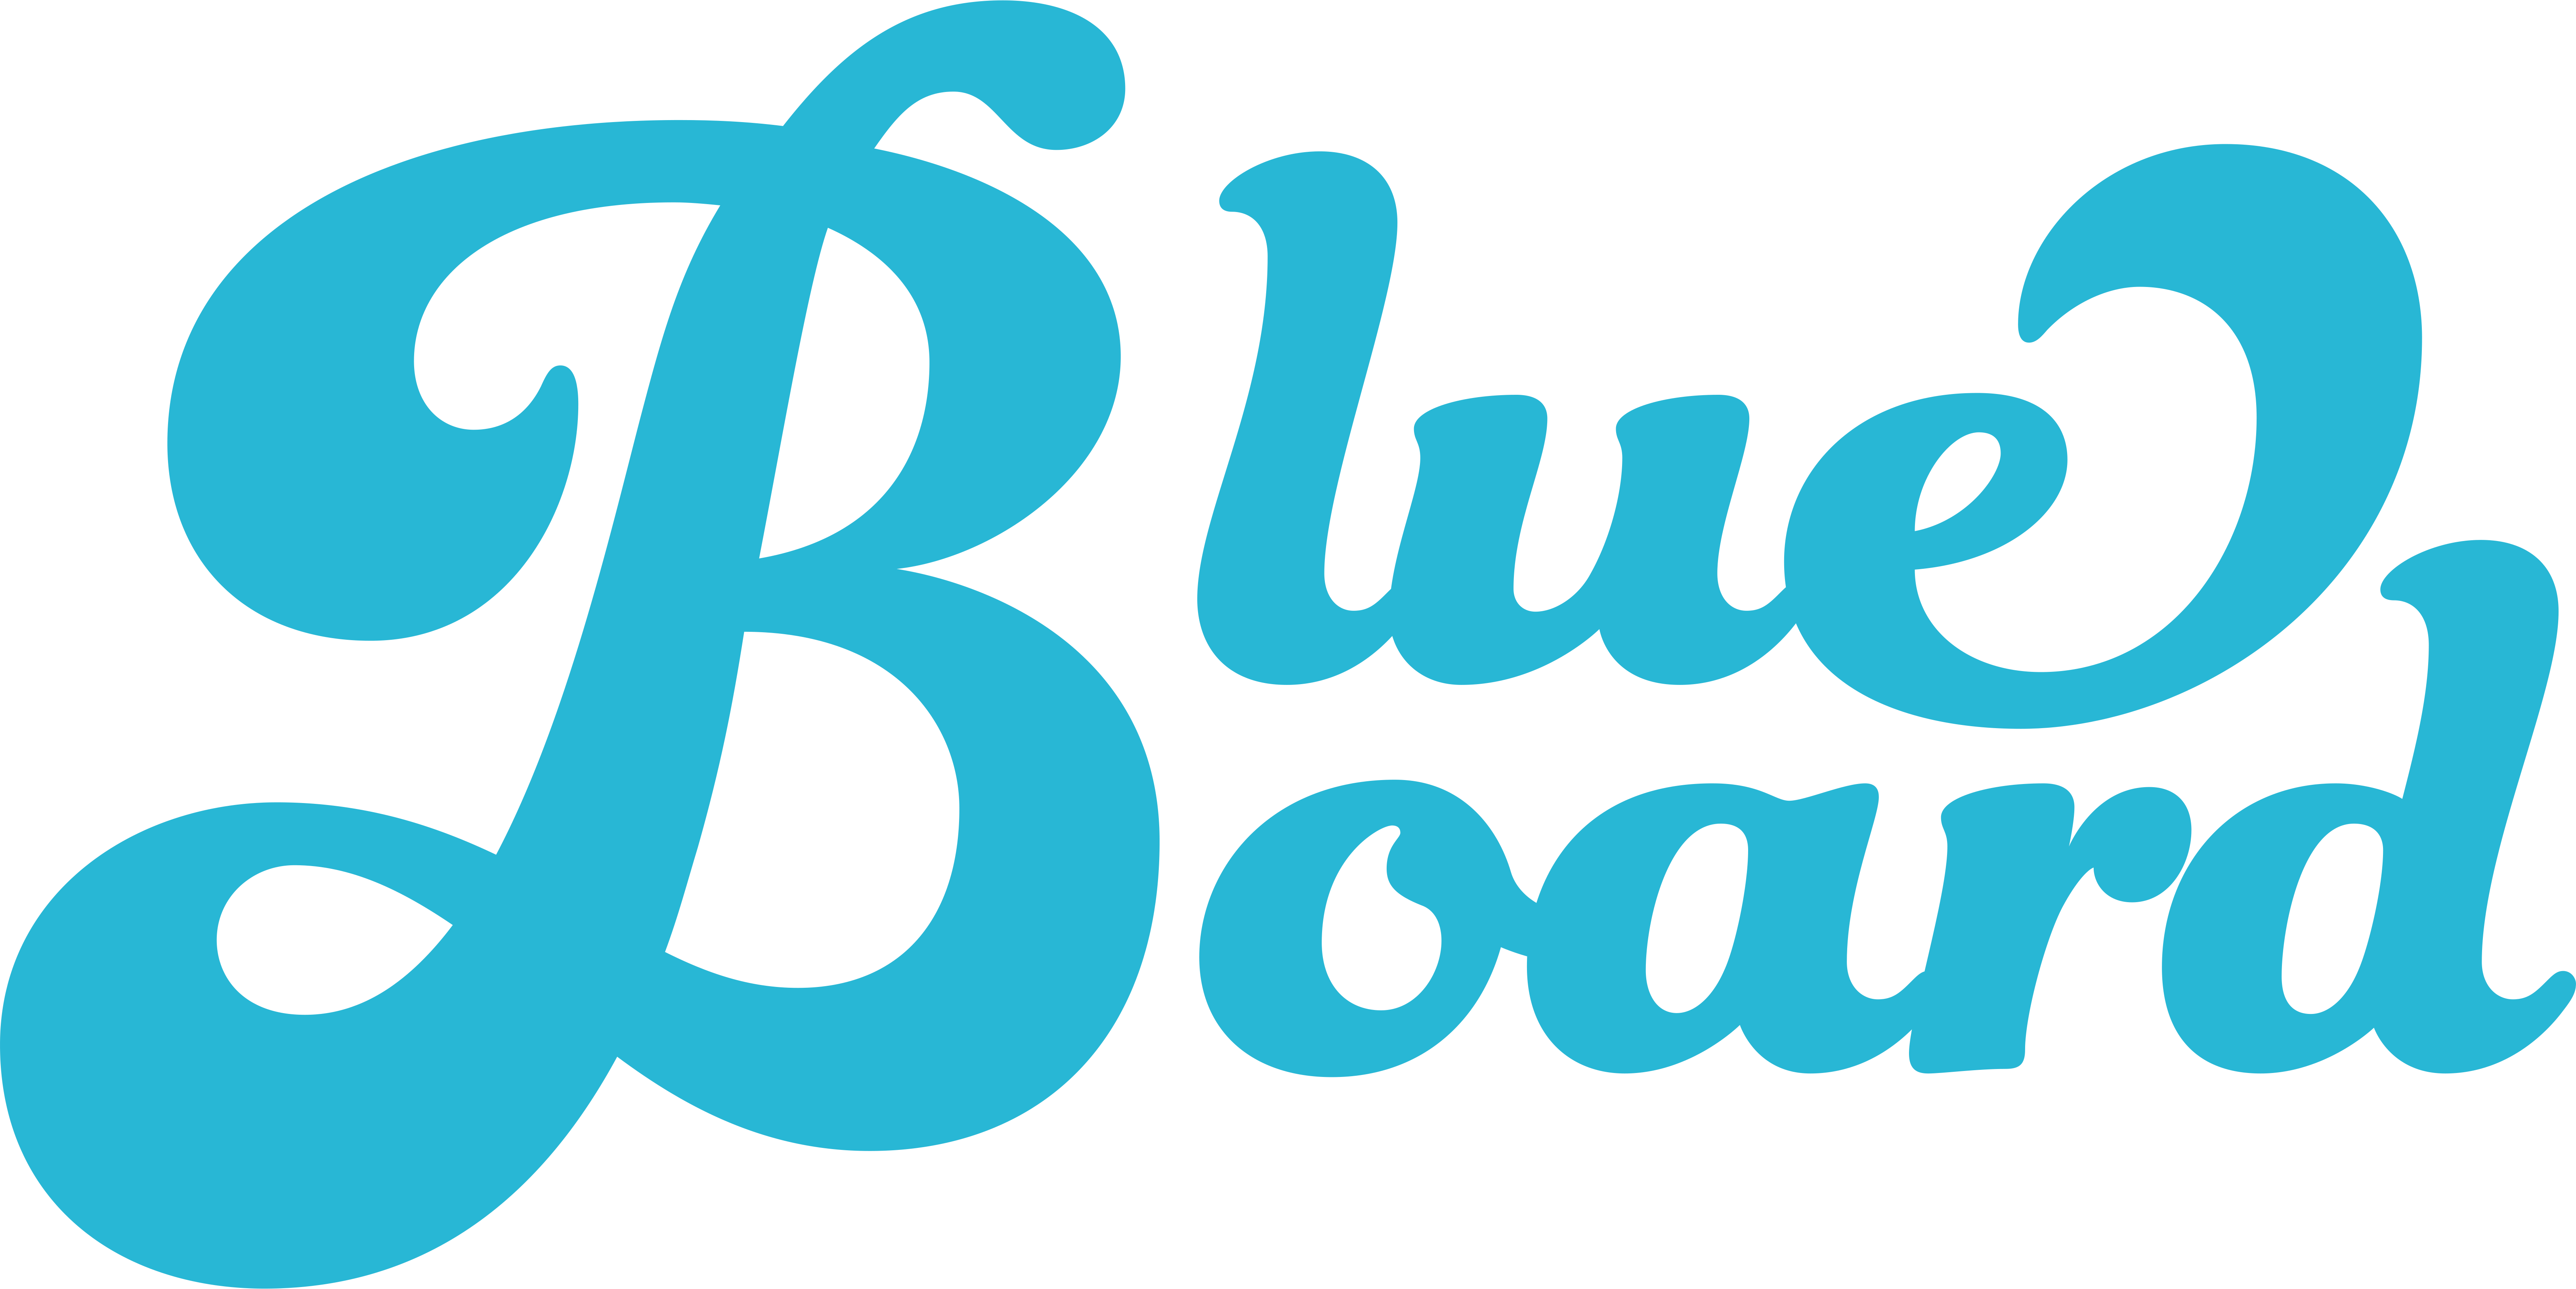 Blueboard Logo White